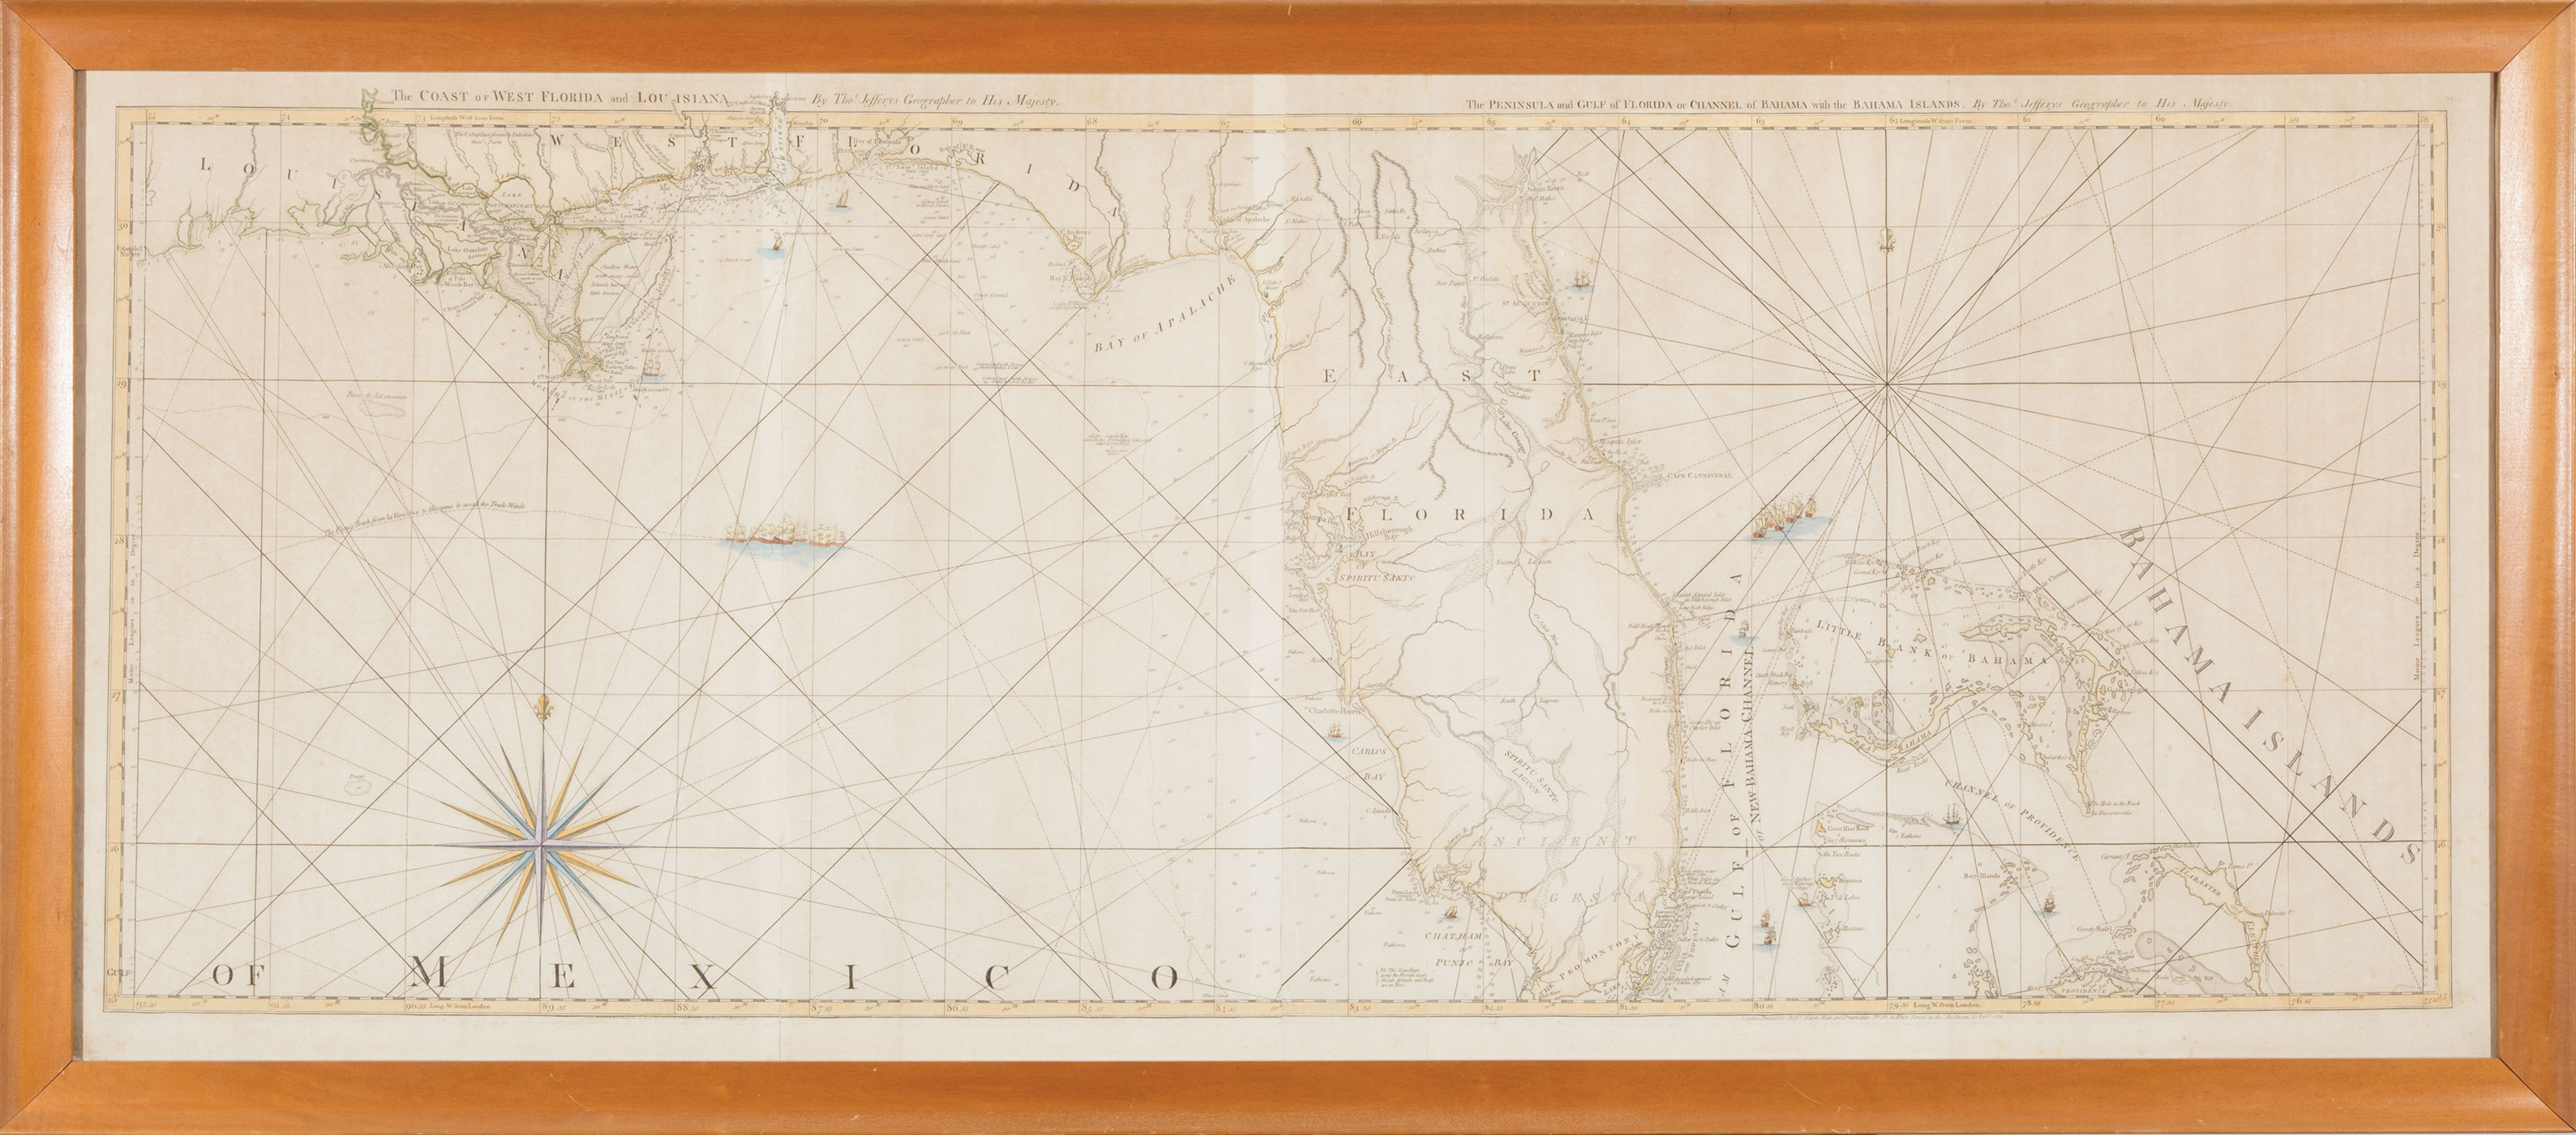 Thomas Jefferys (English, 1719-1717), "The Coast of West Florida and Louisiana/ The Peninsula and